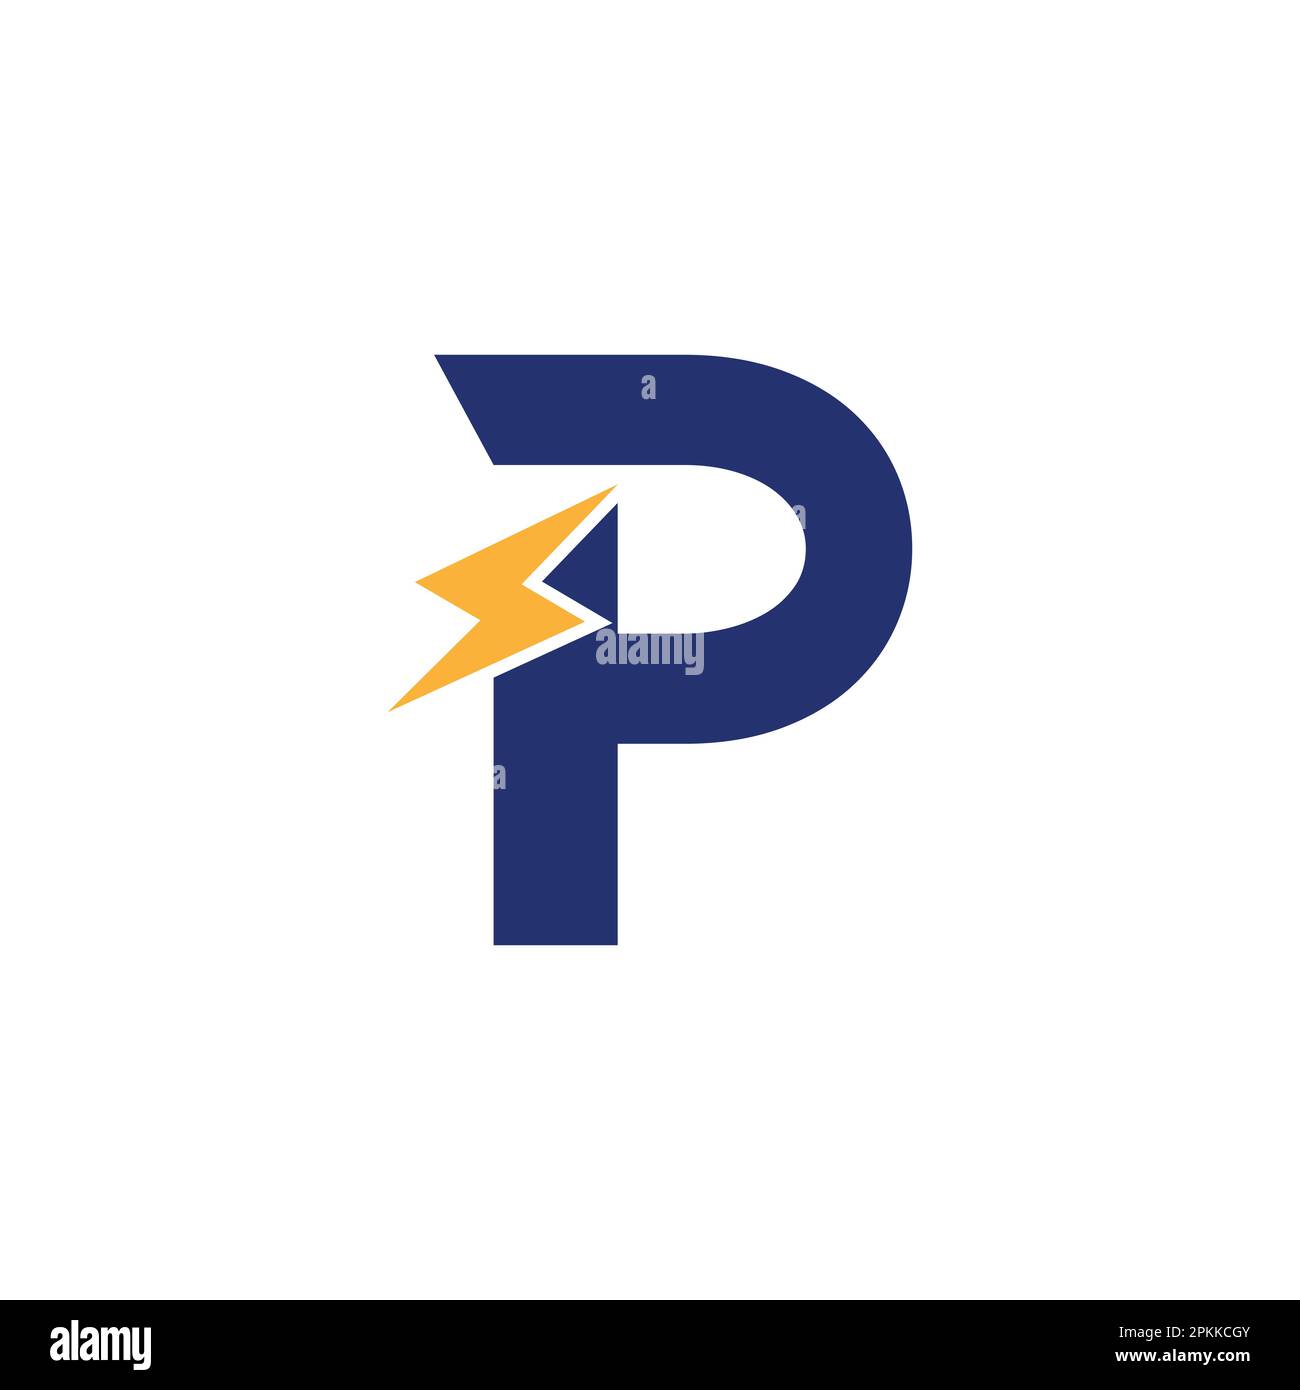 Logo lettre P avec motif vectoriel Lightning Thunder Bolt. Illustration du vecteur du logo lettre P du boulon électrique. Illustration de Vecteur